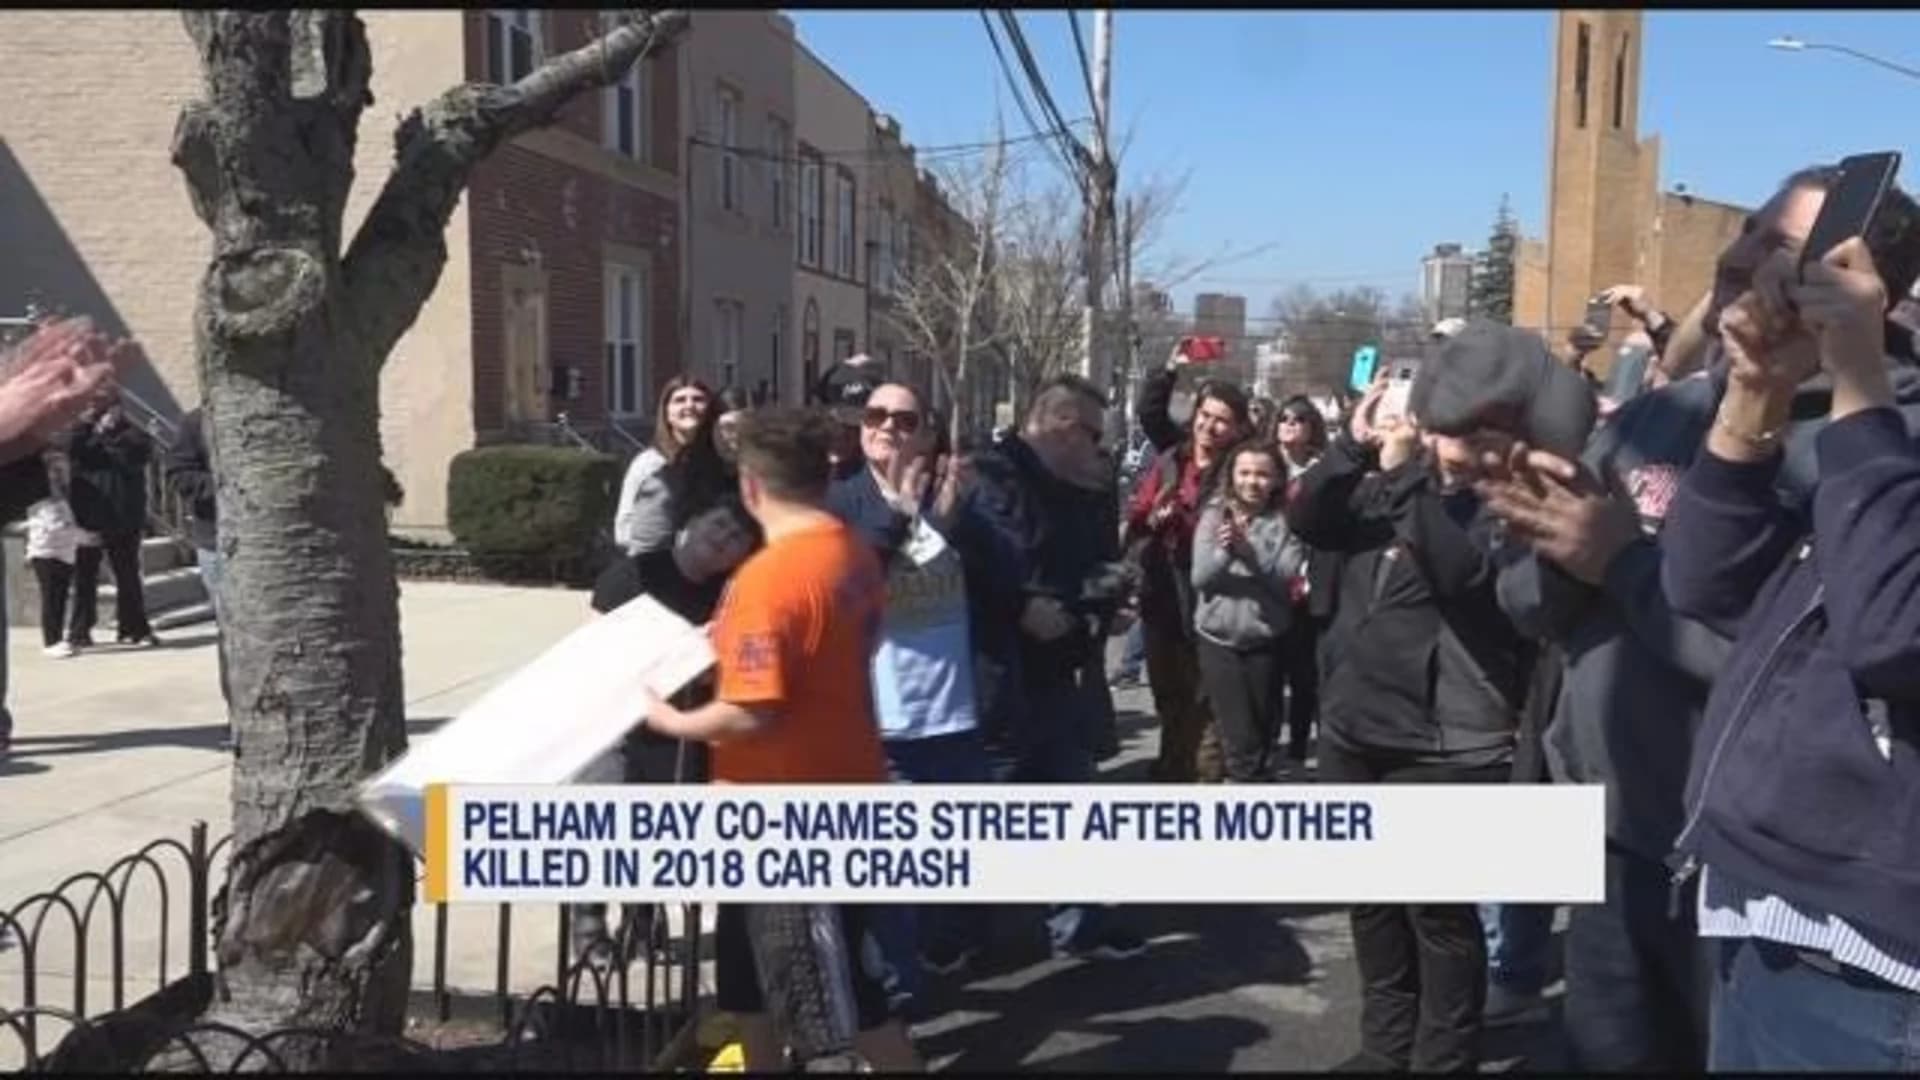 Pelham Bay community co-names street to remember cheerleading coach